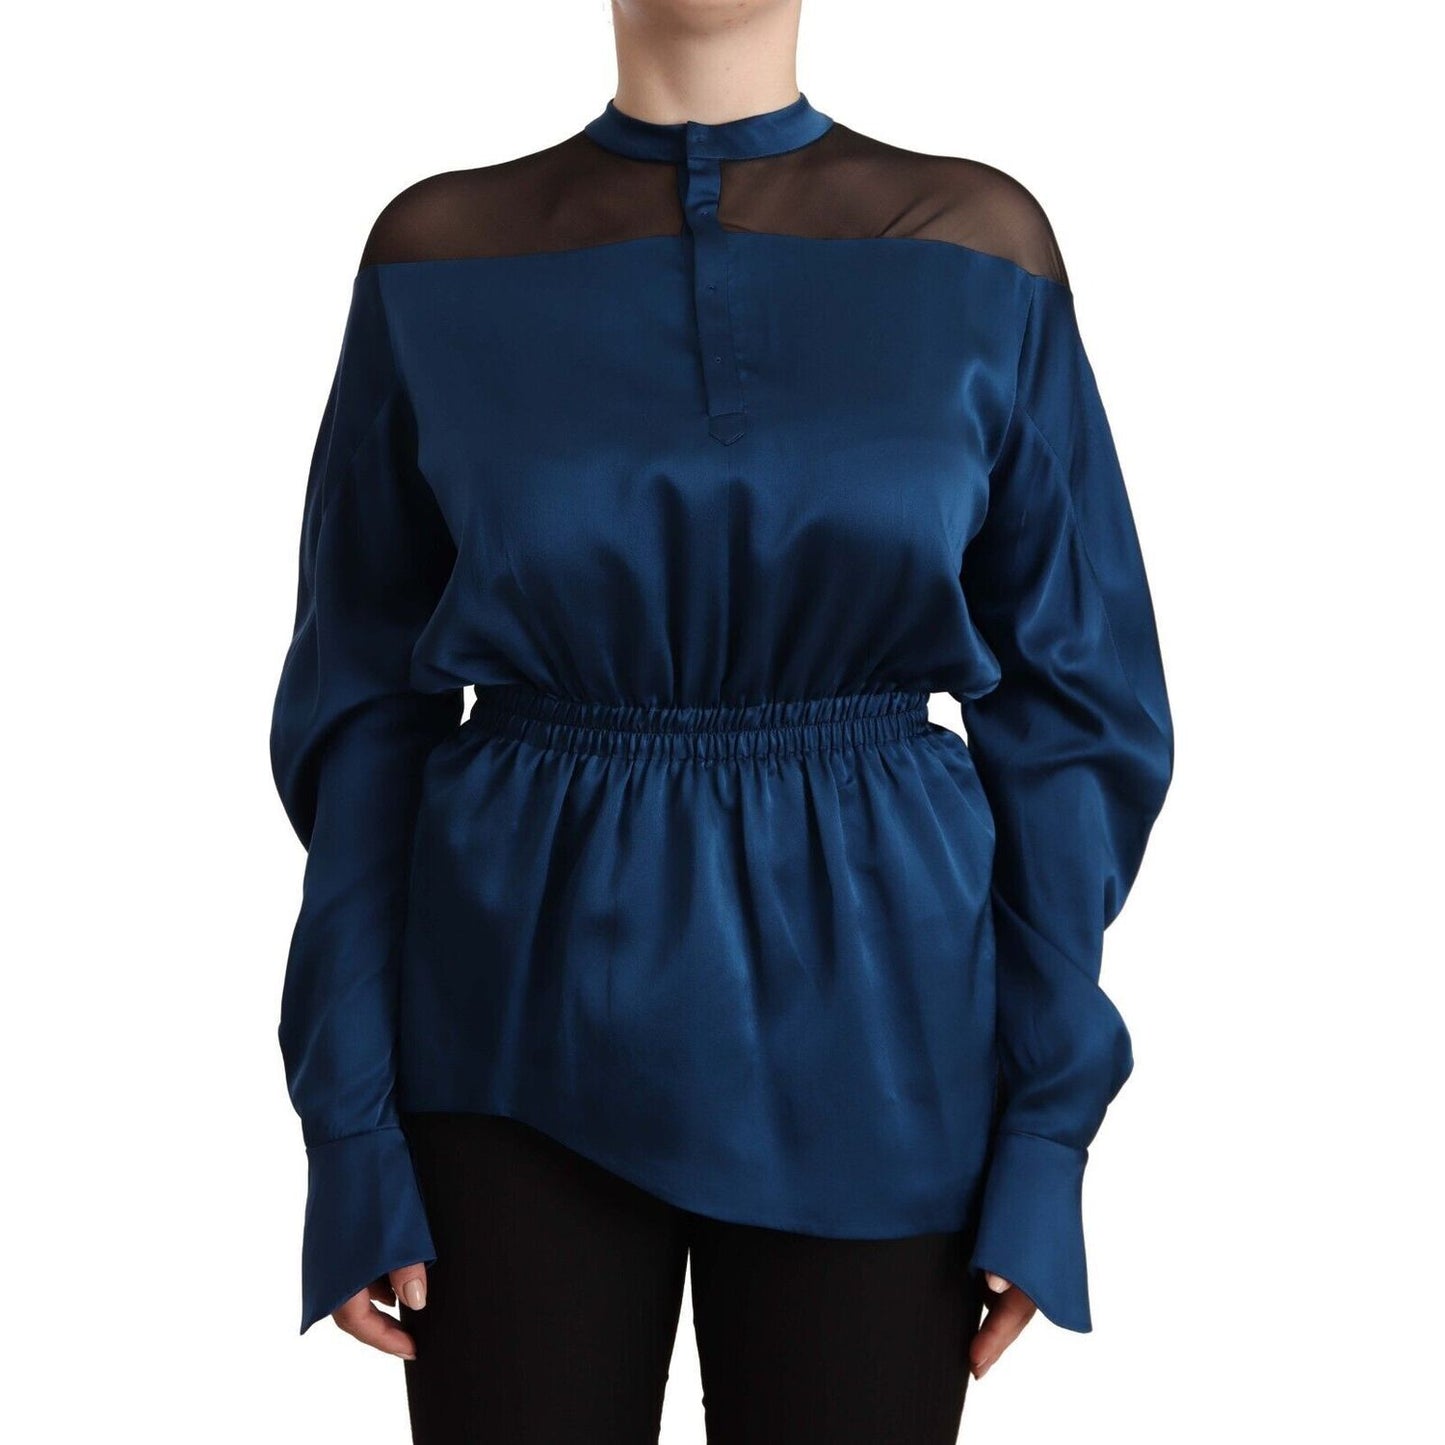 Masha Ma Elegant Crew Neck Silk Blouse in Blue blue-silk-long-sleeves-elastic-waist-top-blouse WOMAN TOPS AND SHIRTS s-l1600-32-f4dfffd7-27a.jpg